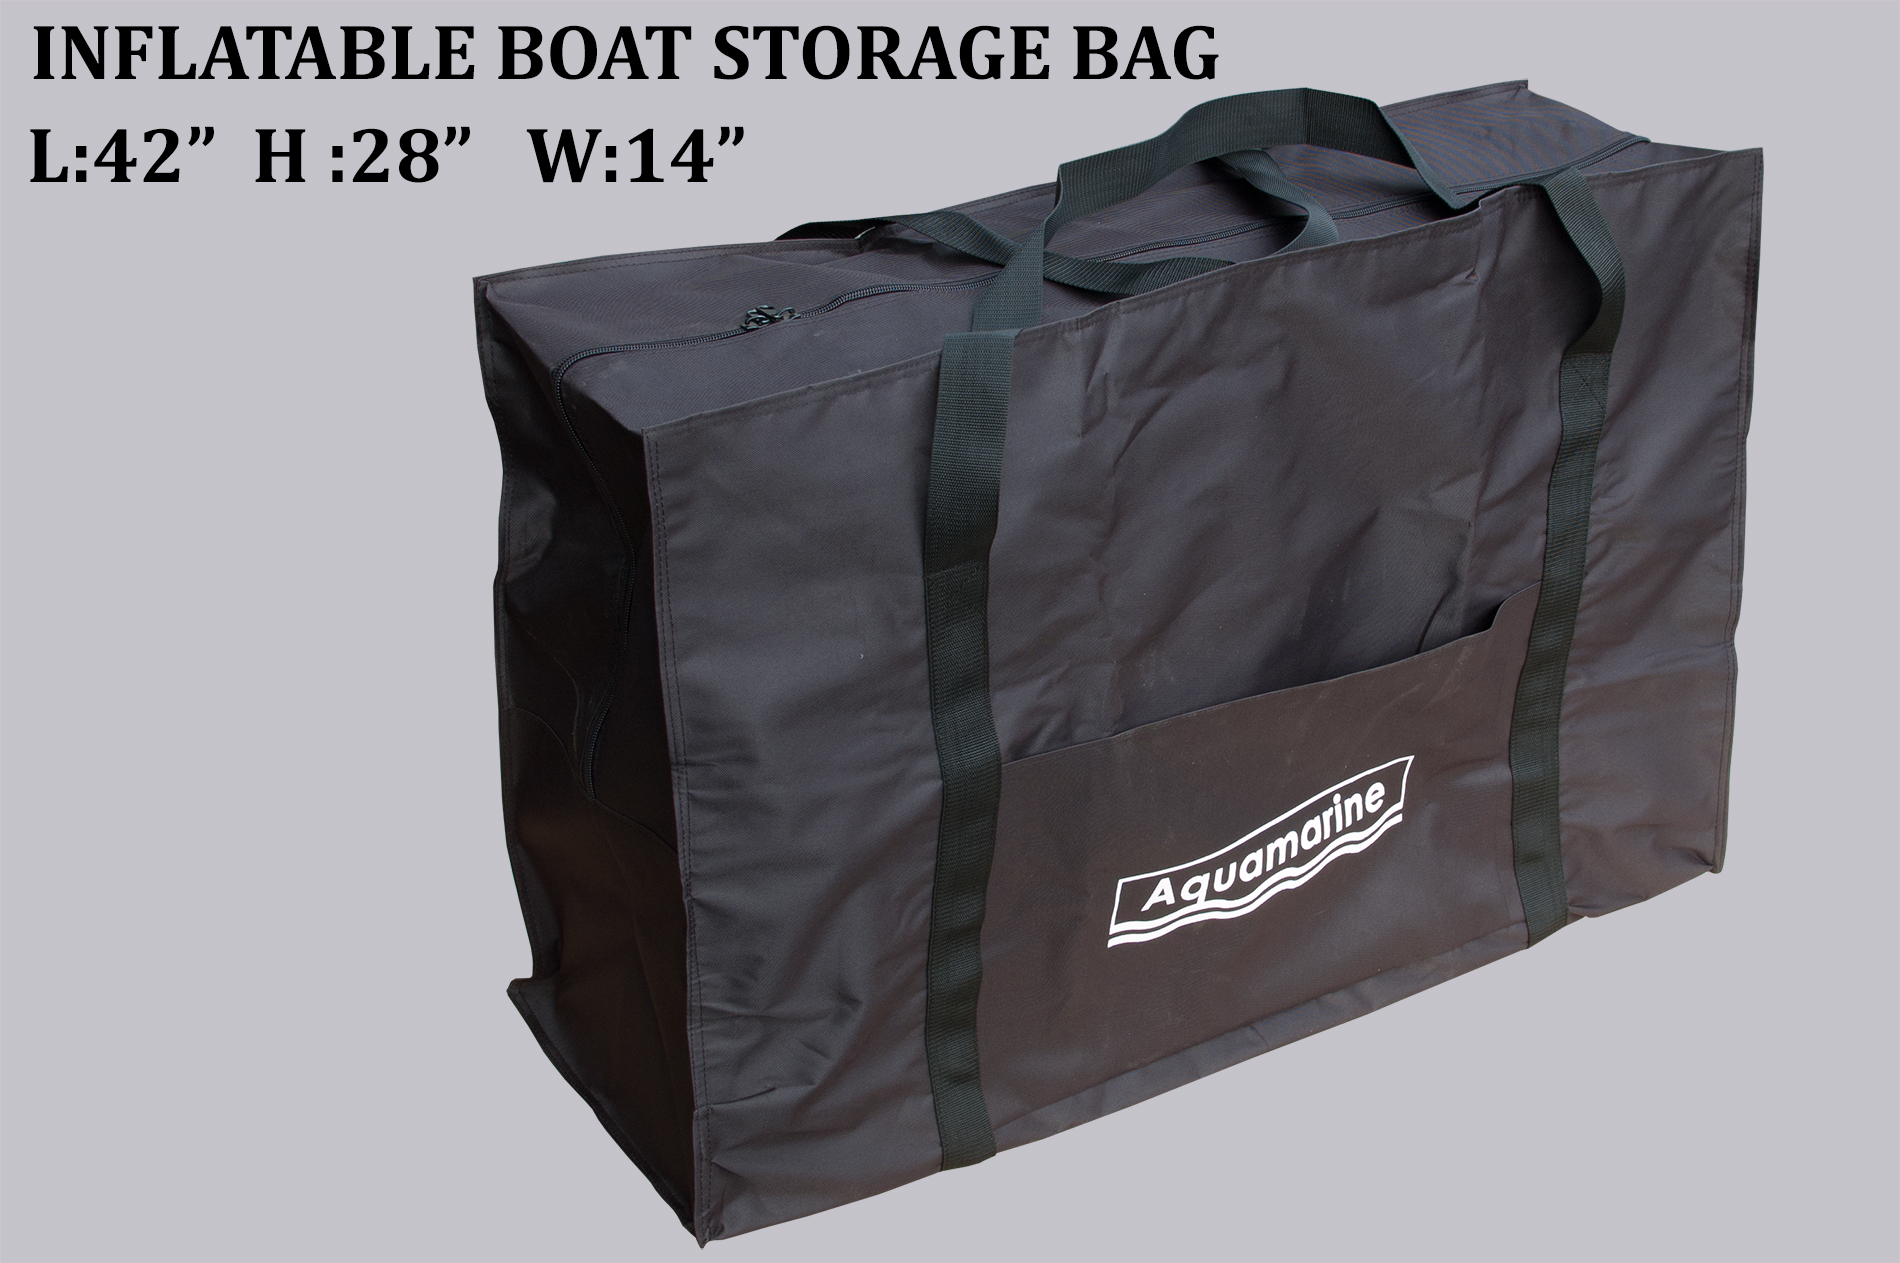 Storage Bag for inflatable boat dinghy